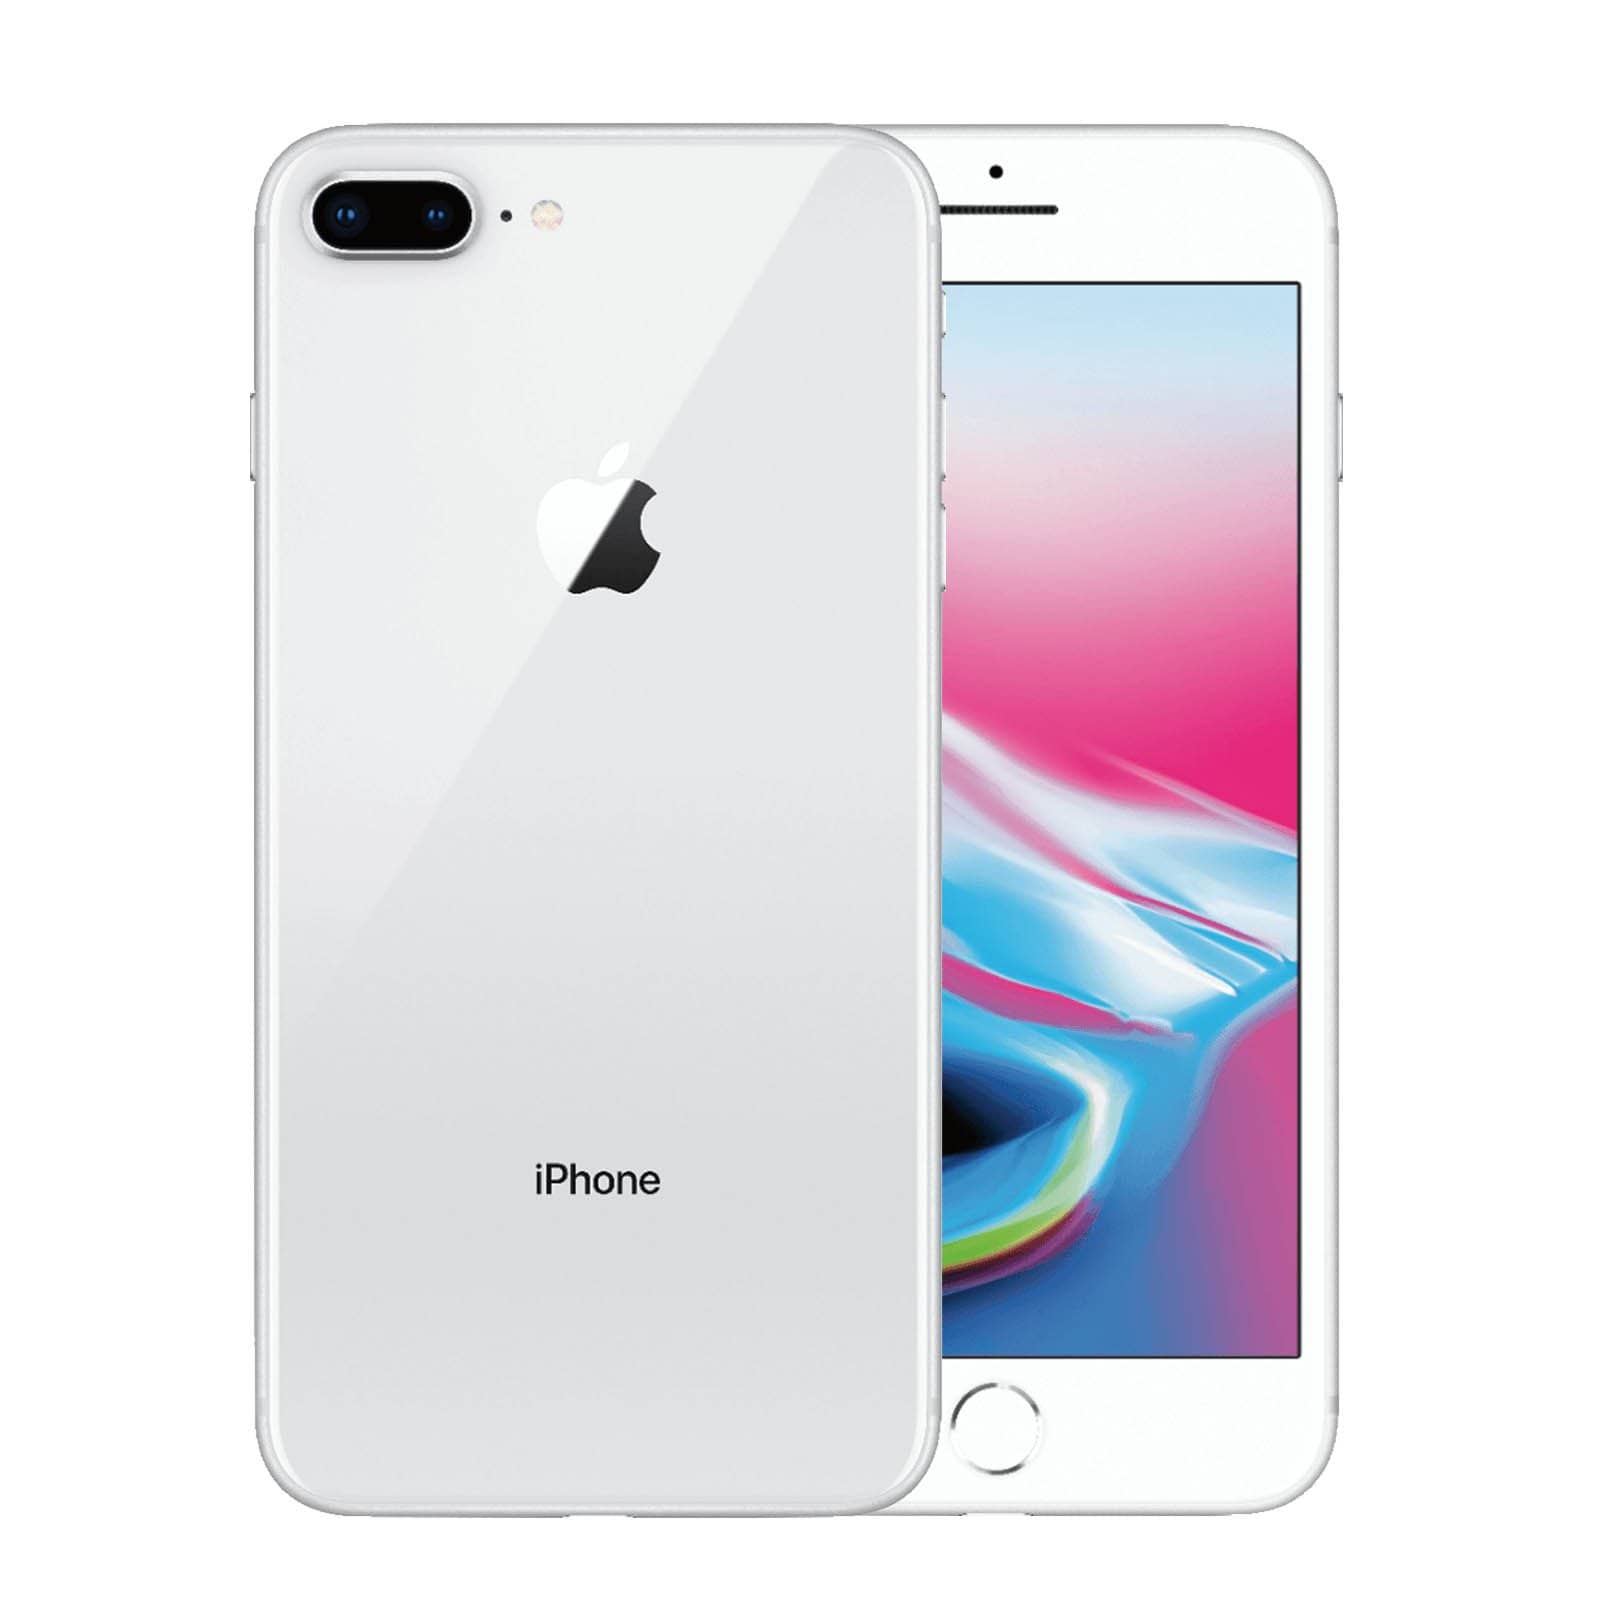 Apple iPhone 8 Plus 256GB Silver Very Good - Unlocked